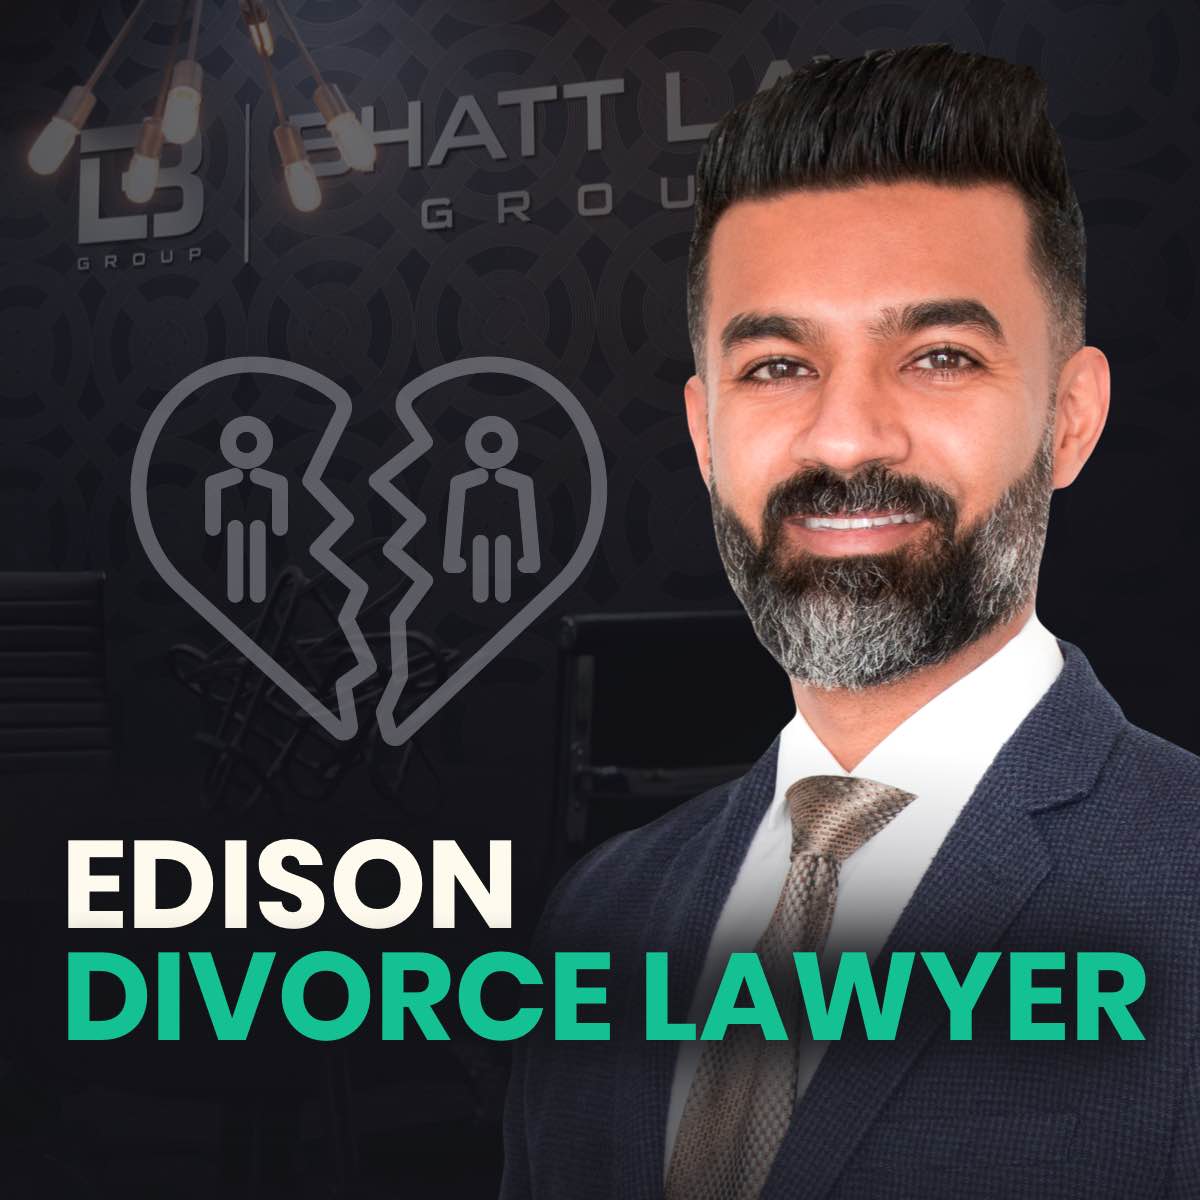 Edison Divorce Lawyer